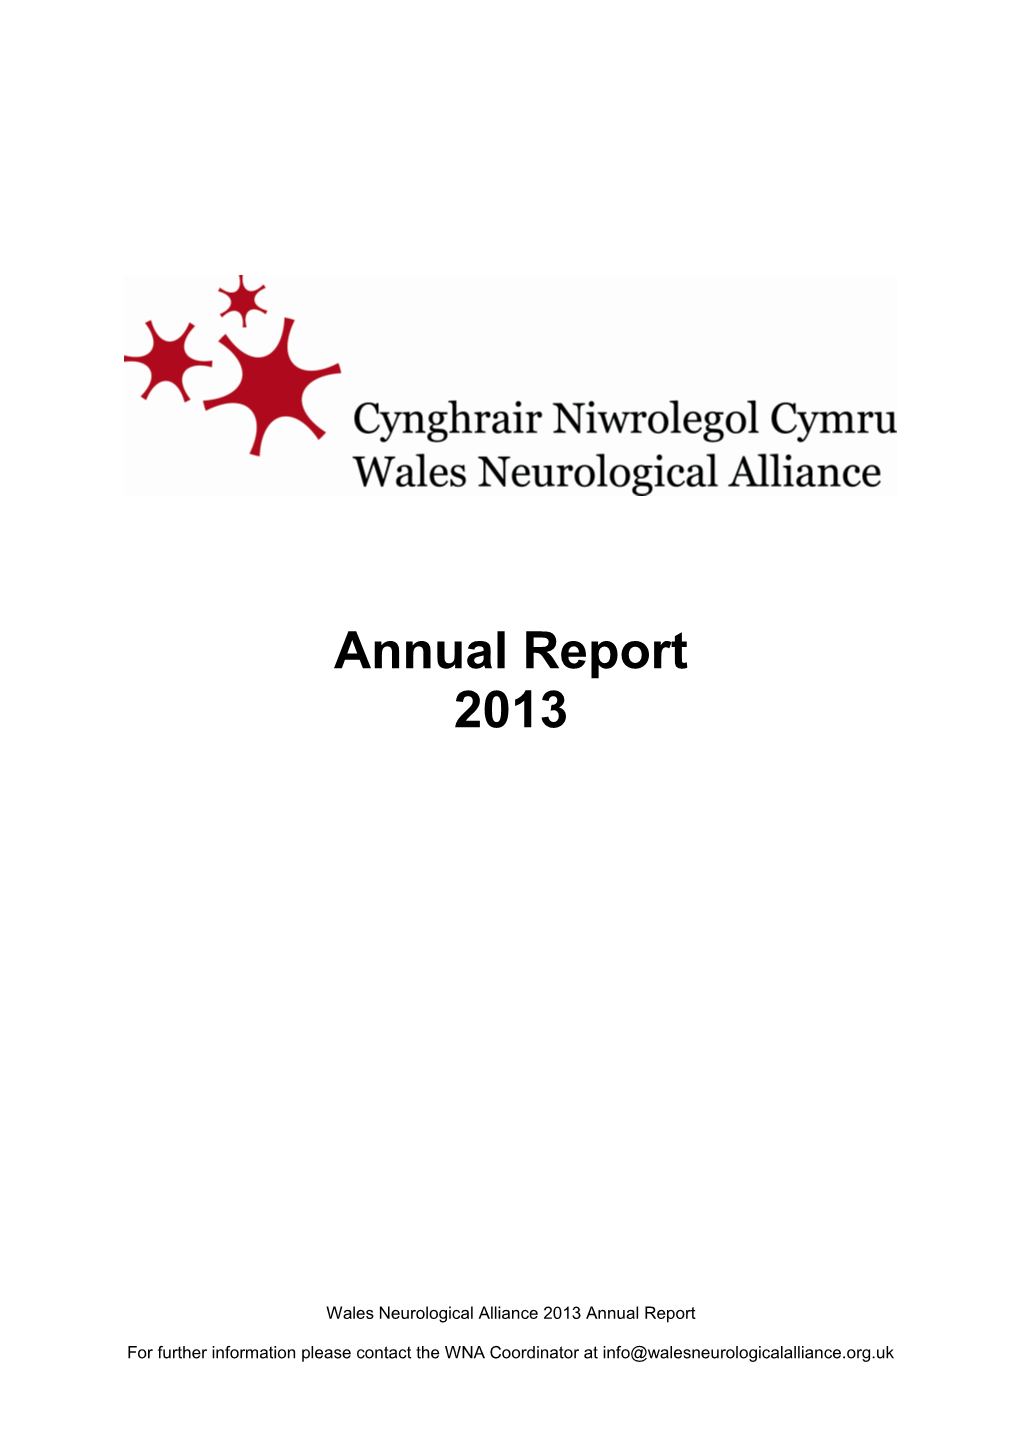 The Wales Neurological Alliance 2013 Membership